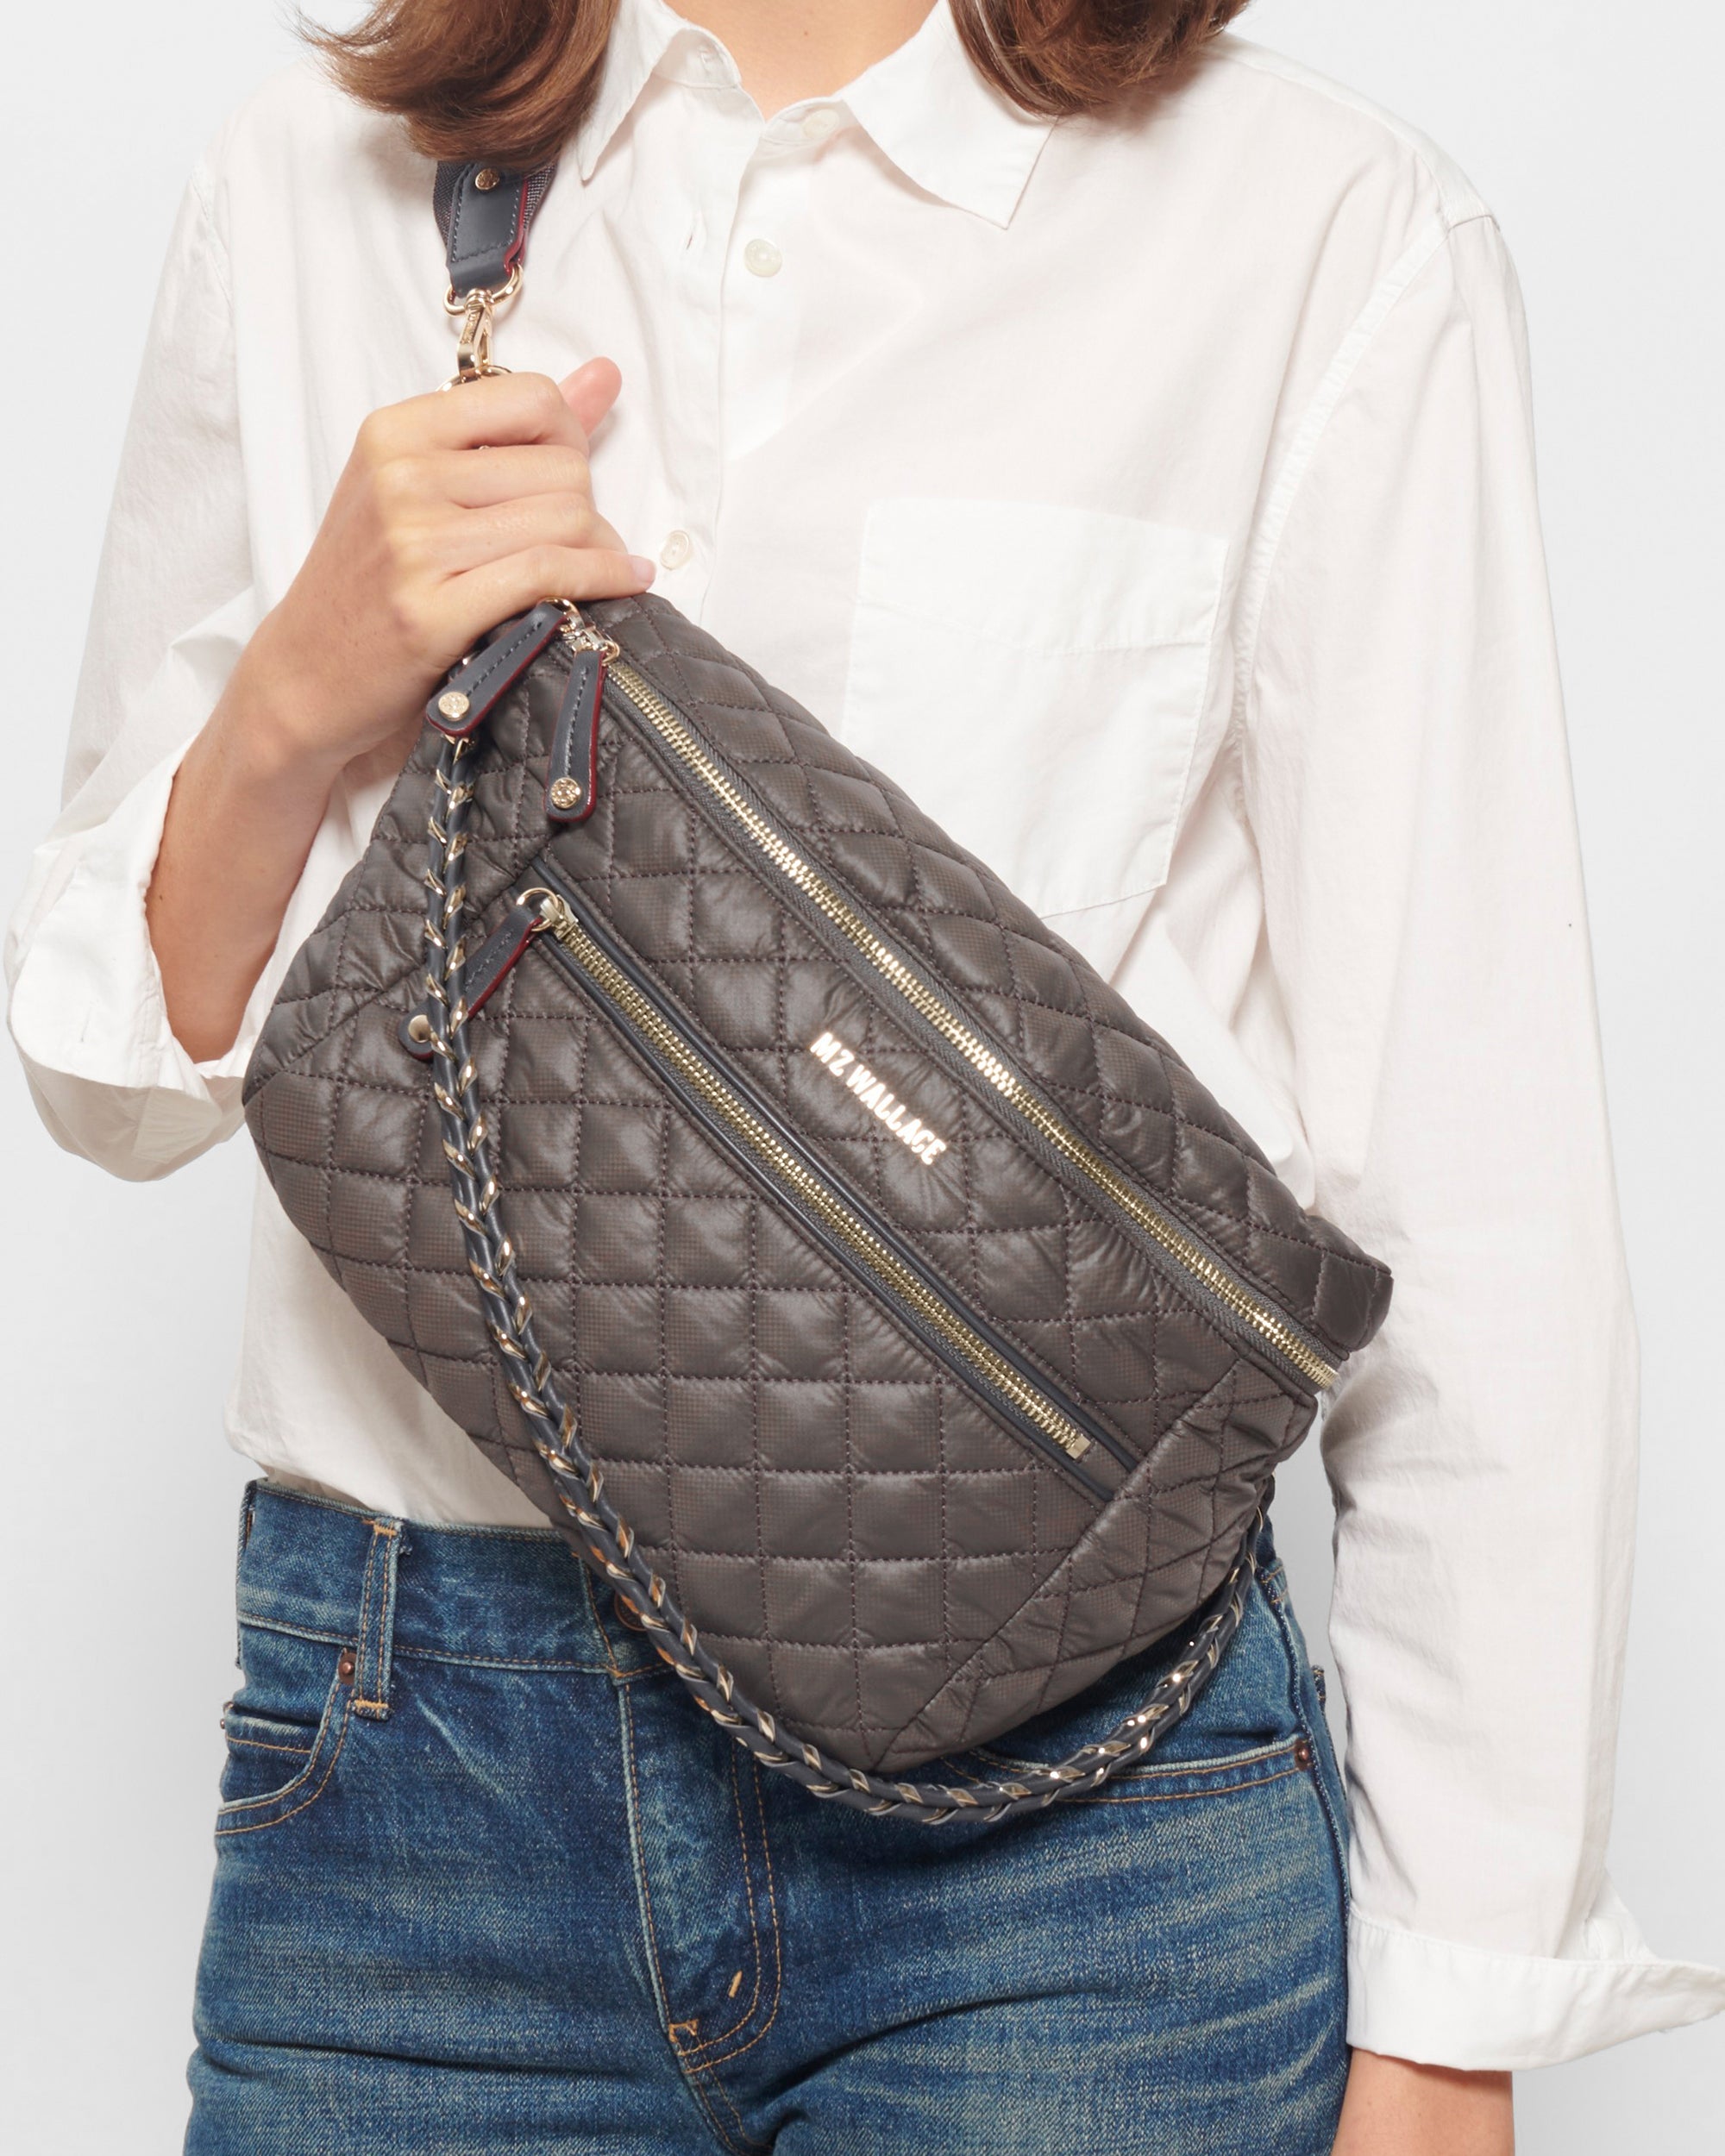 MARC JACOBS New York Maroon Soft Pebbled Leather Handbag & Dust Bag 16x10  Magnet | eBay